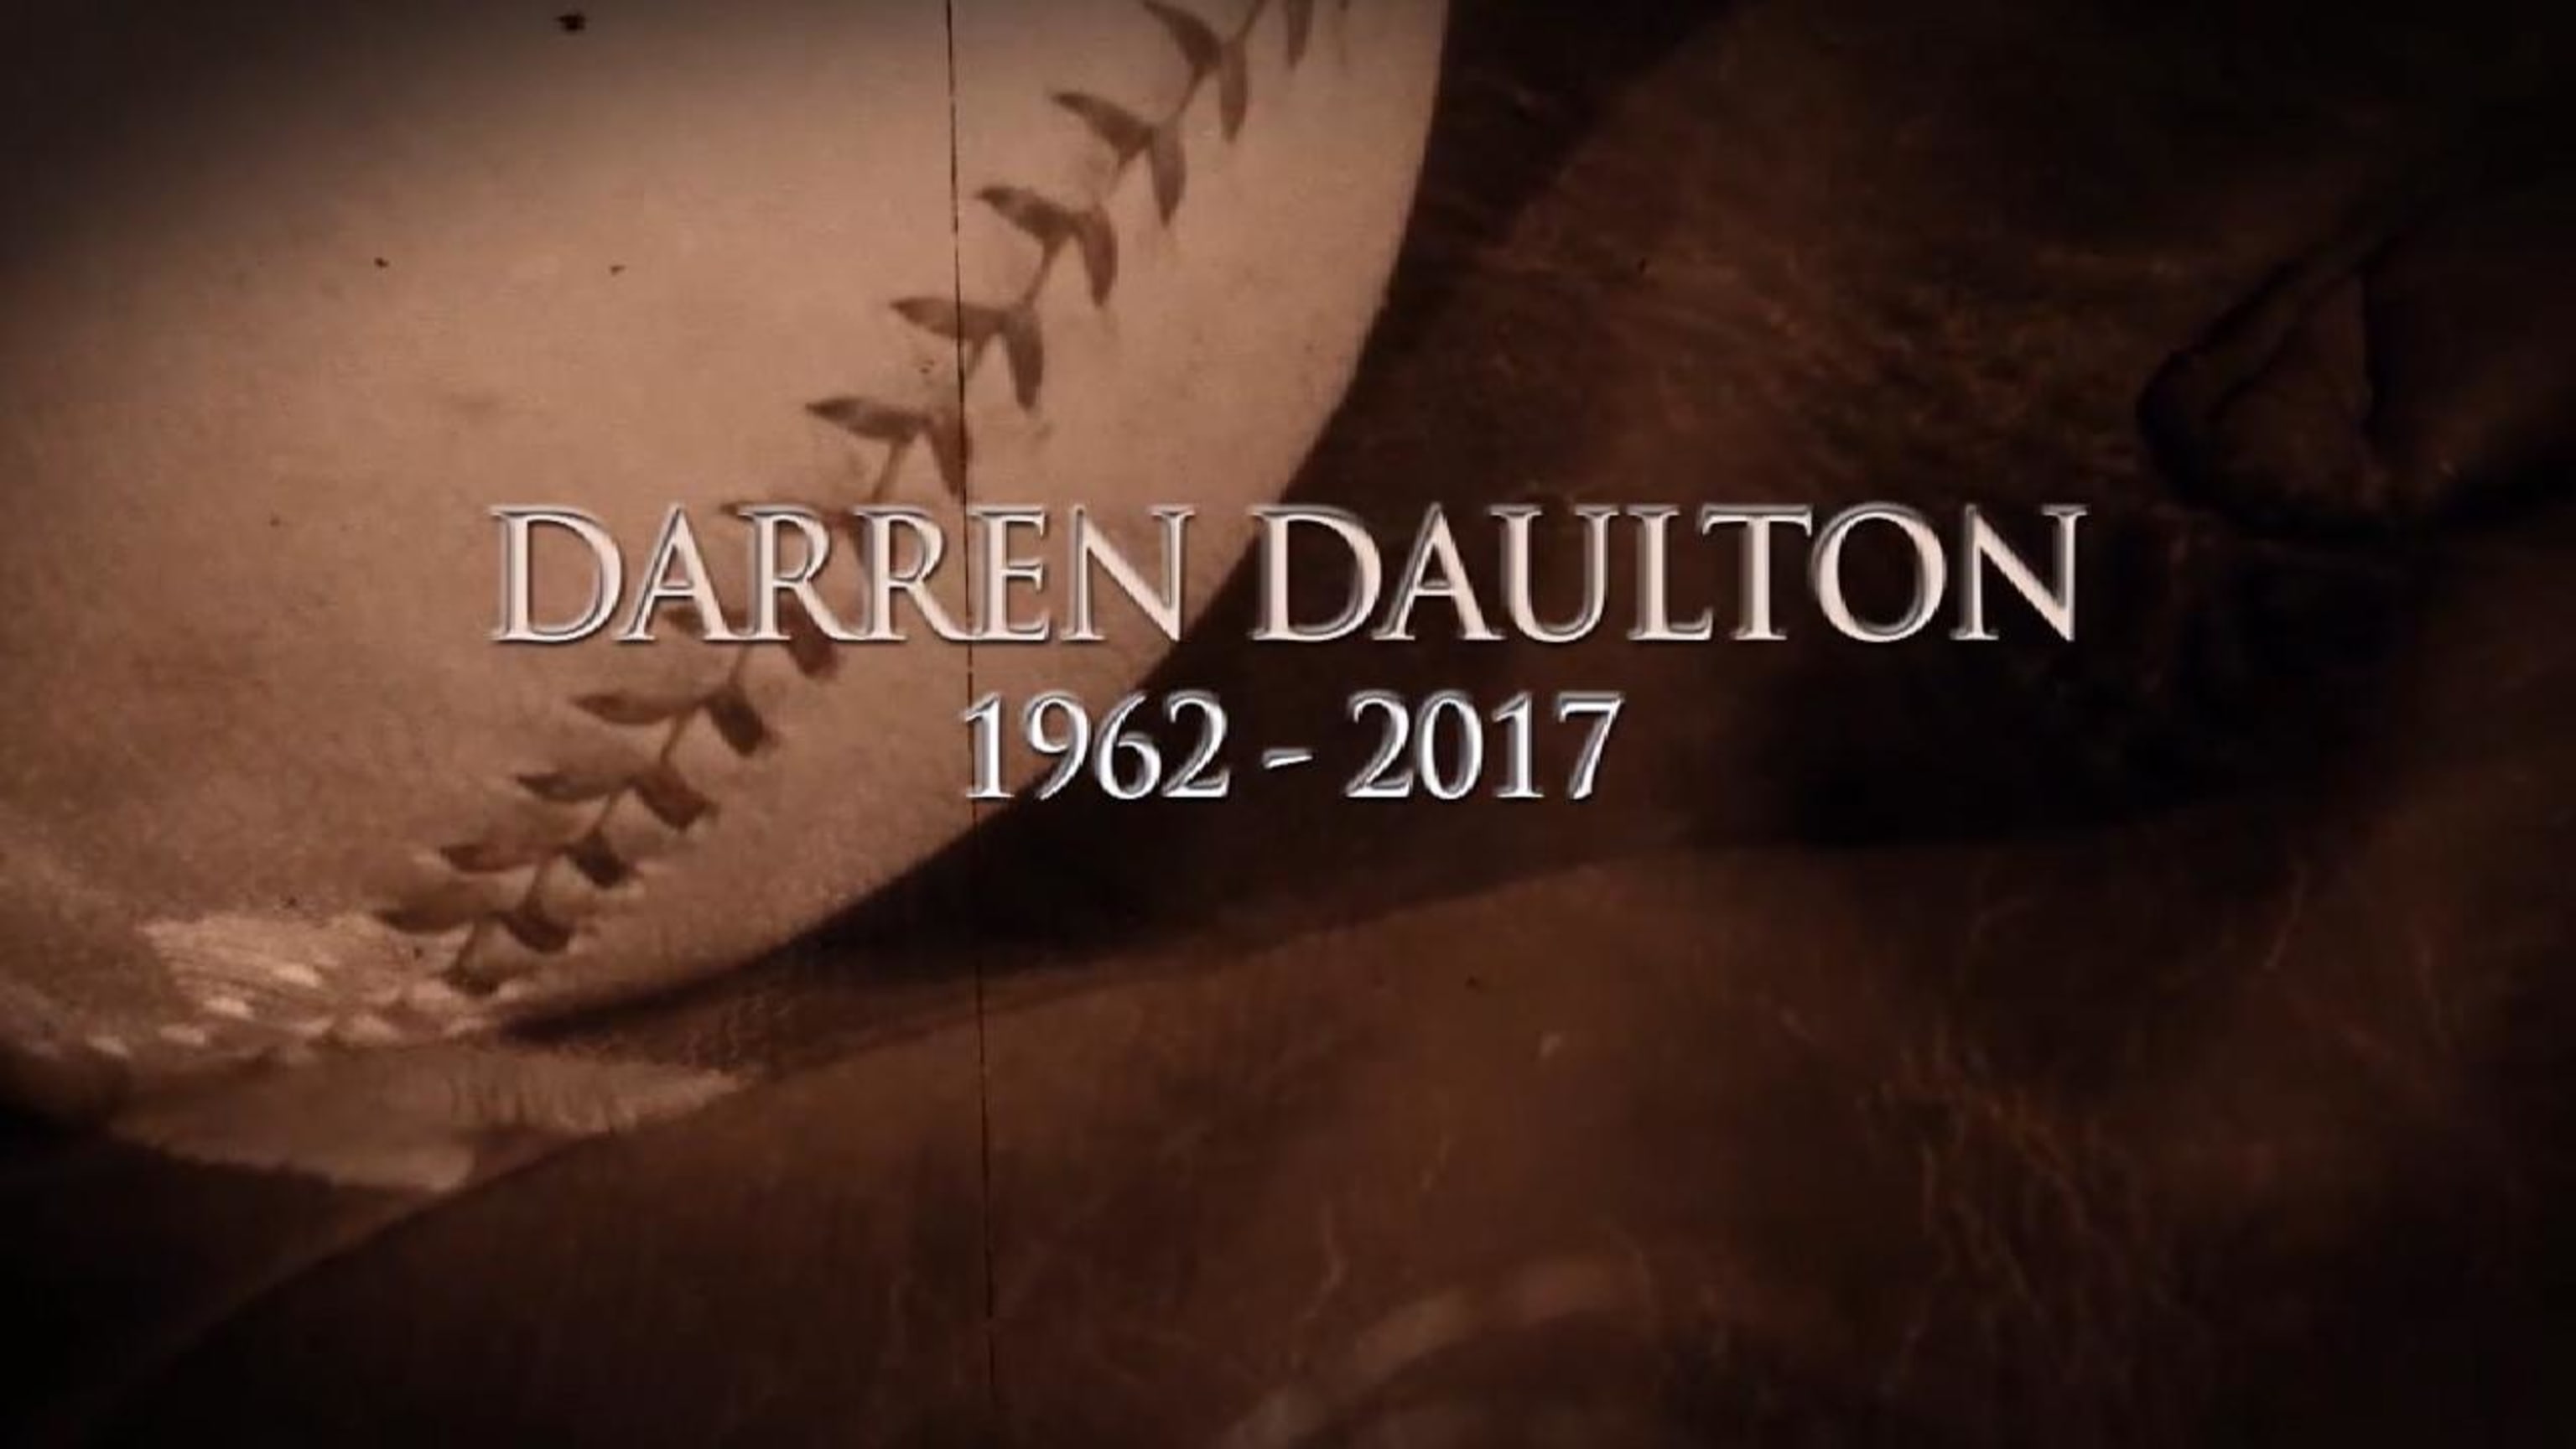 Darren Daulton was everything we wanted to be